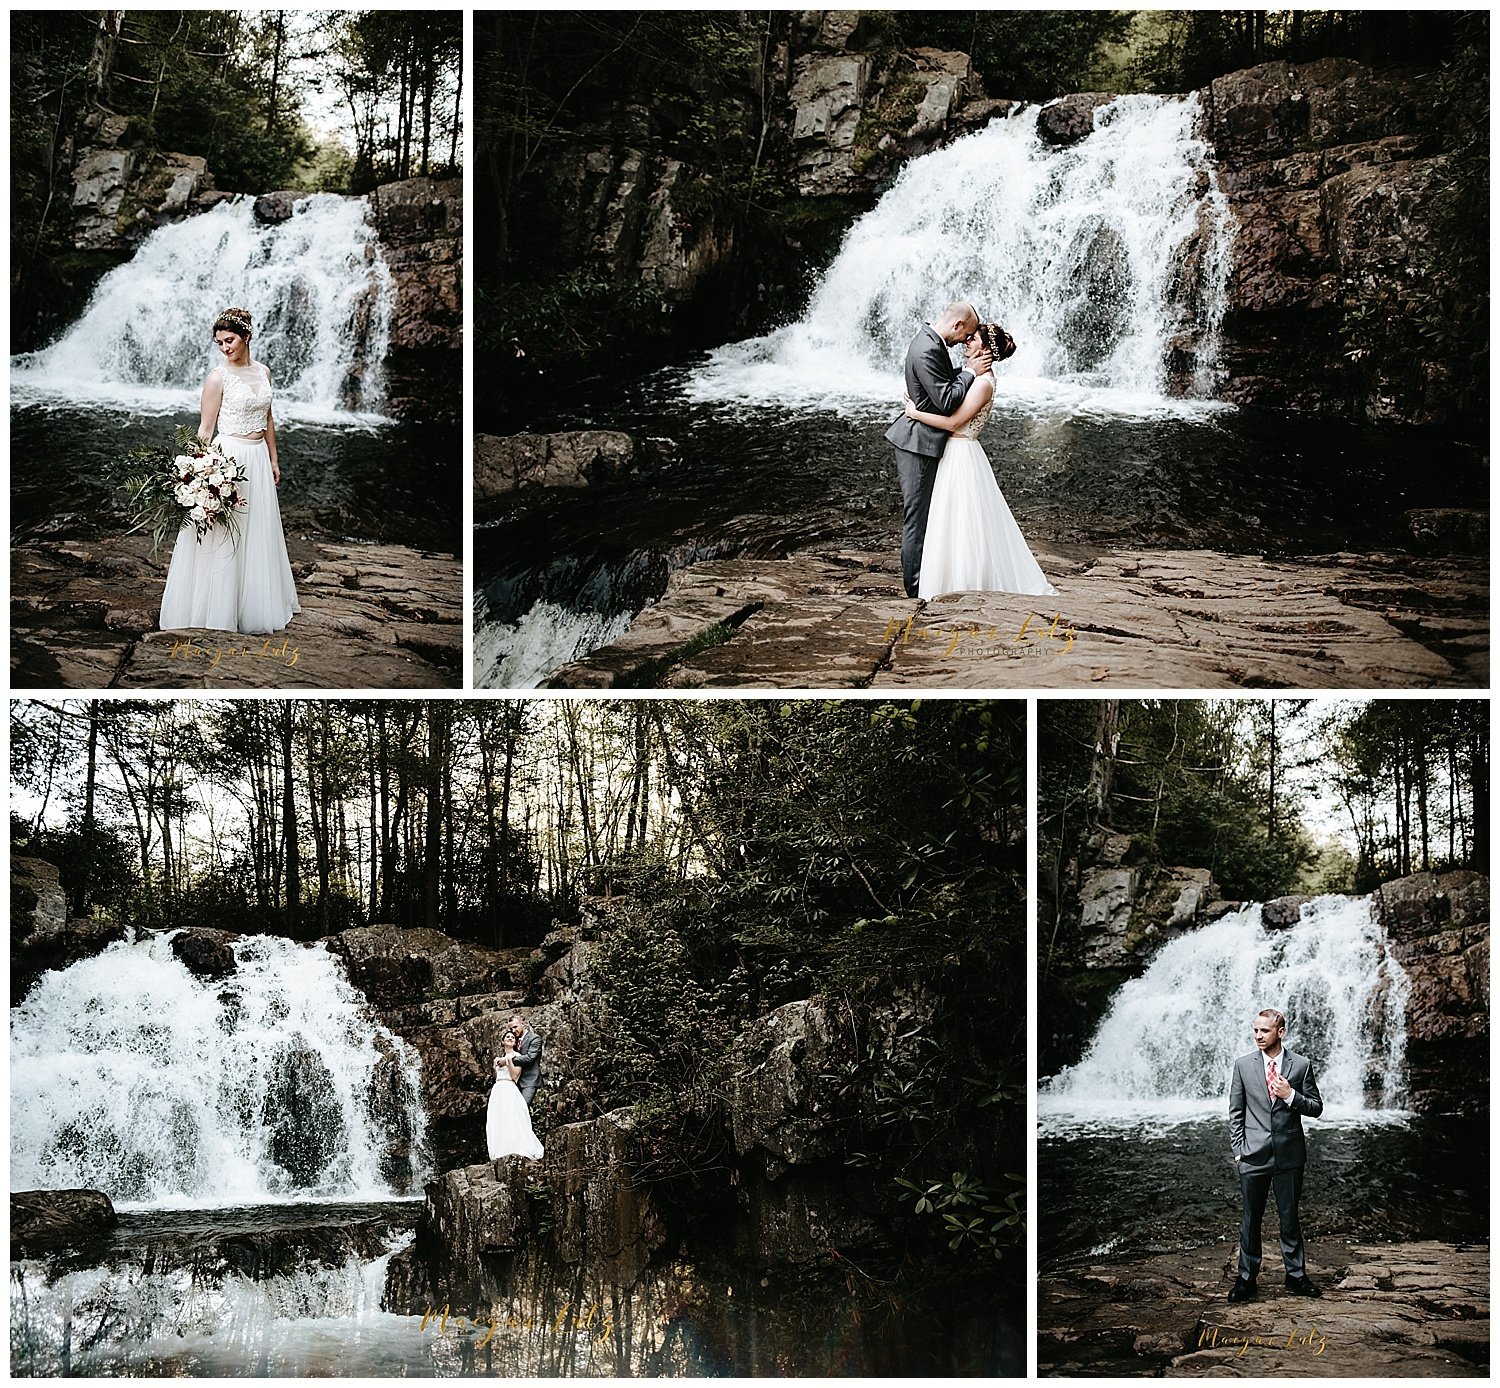 NEPA-wedding-photographer-elopement-at-hickory-run-hawk-falls-waterfall_0018.jpg